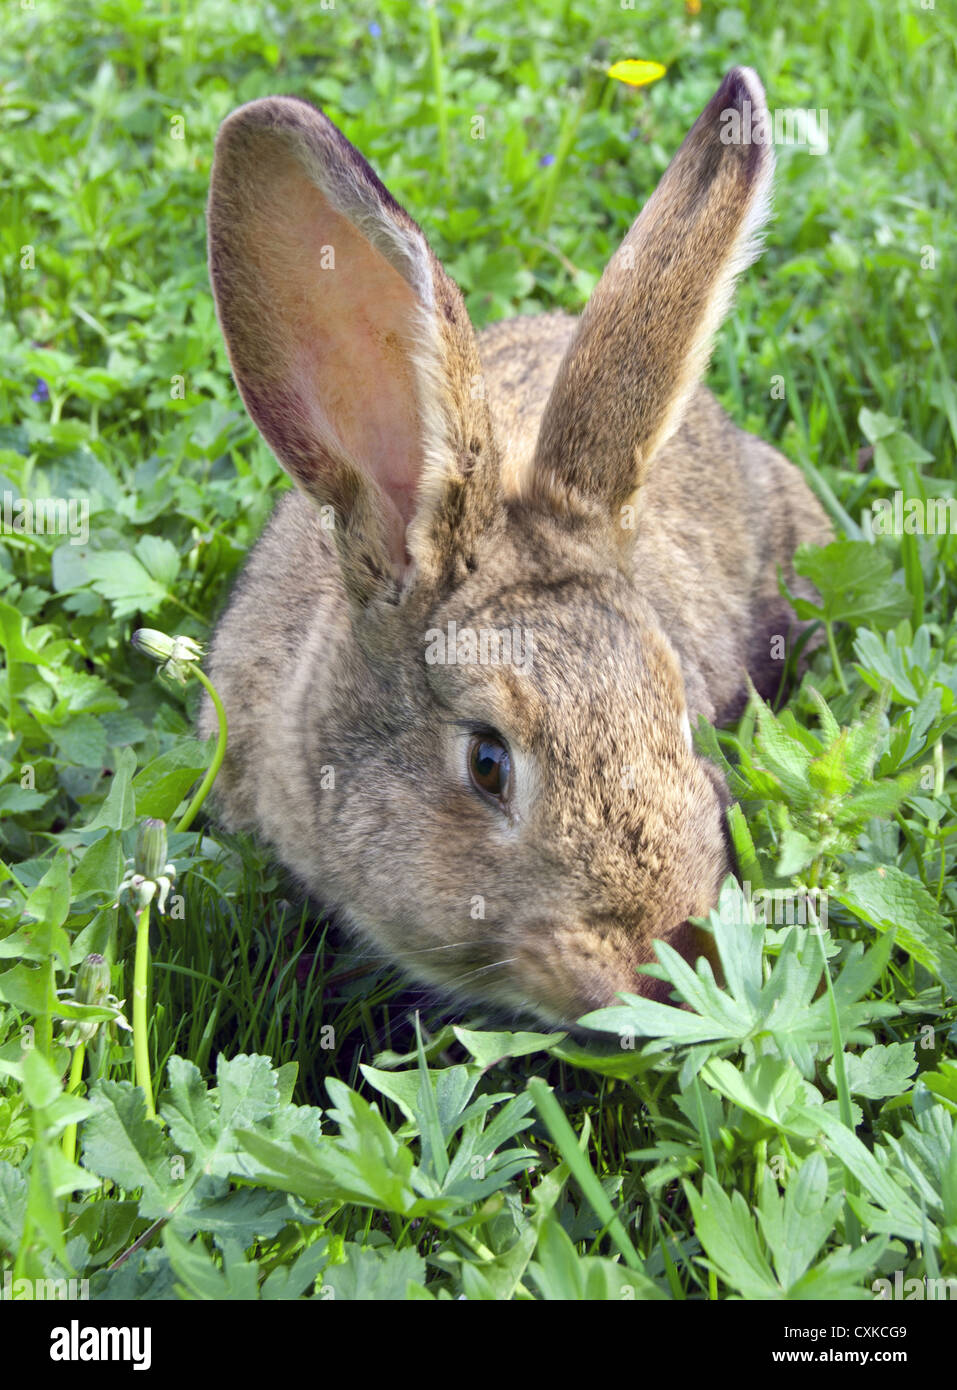 brown rabbit in green grass Stock Photo